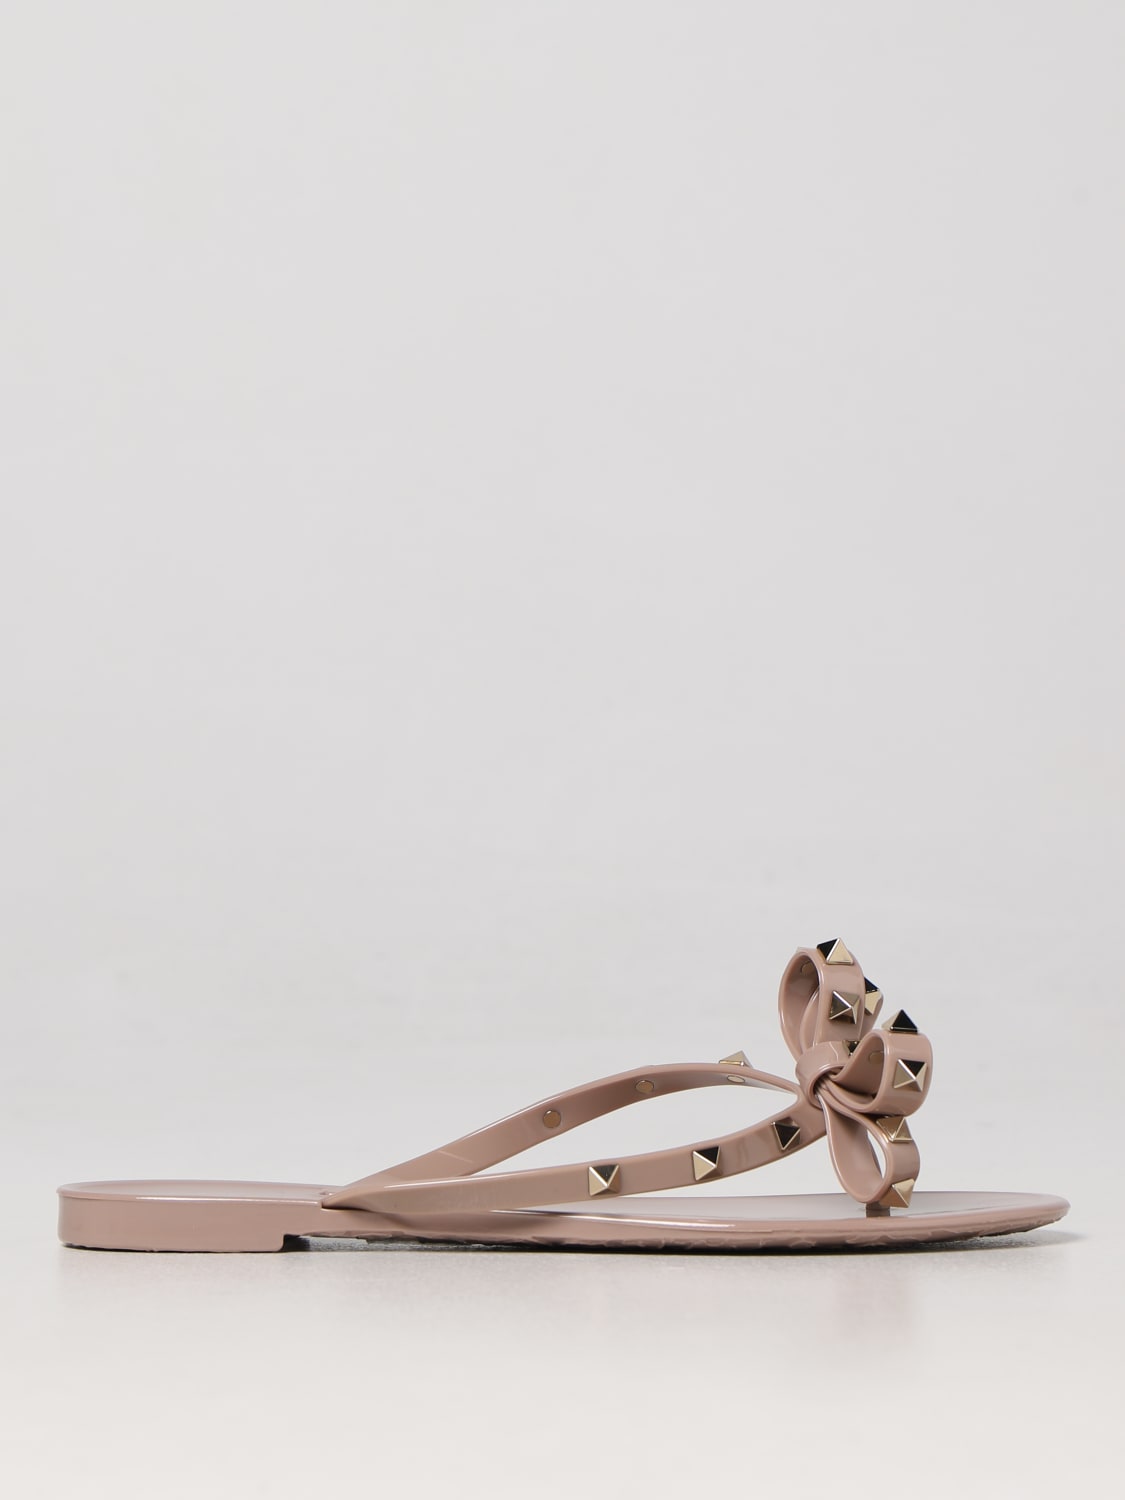 VALENTINO GARAVANI: pvc flops - Blush Pink | Valentino Garavani flat sandals 2W2S0552PVS online on GIGLIO.COM